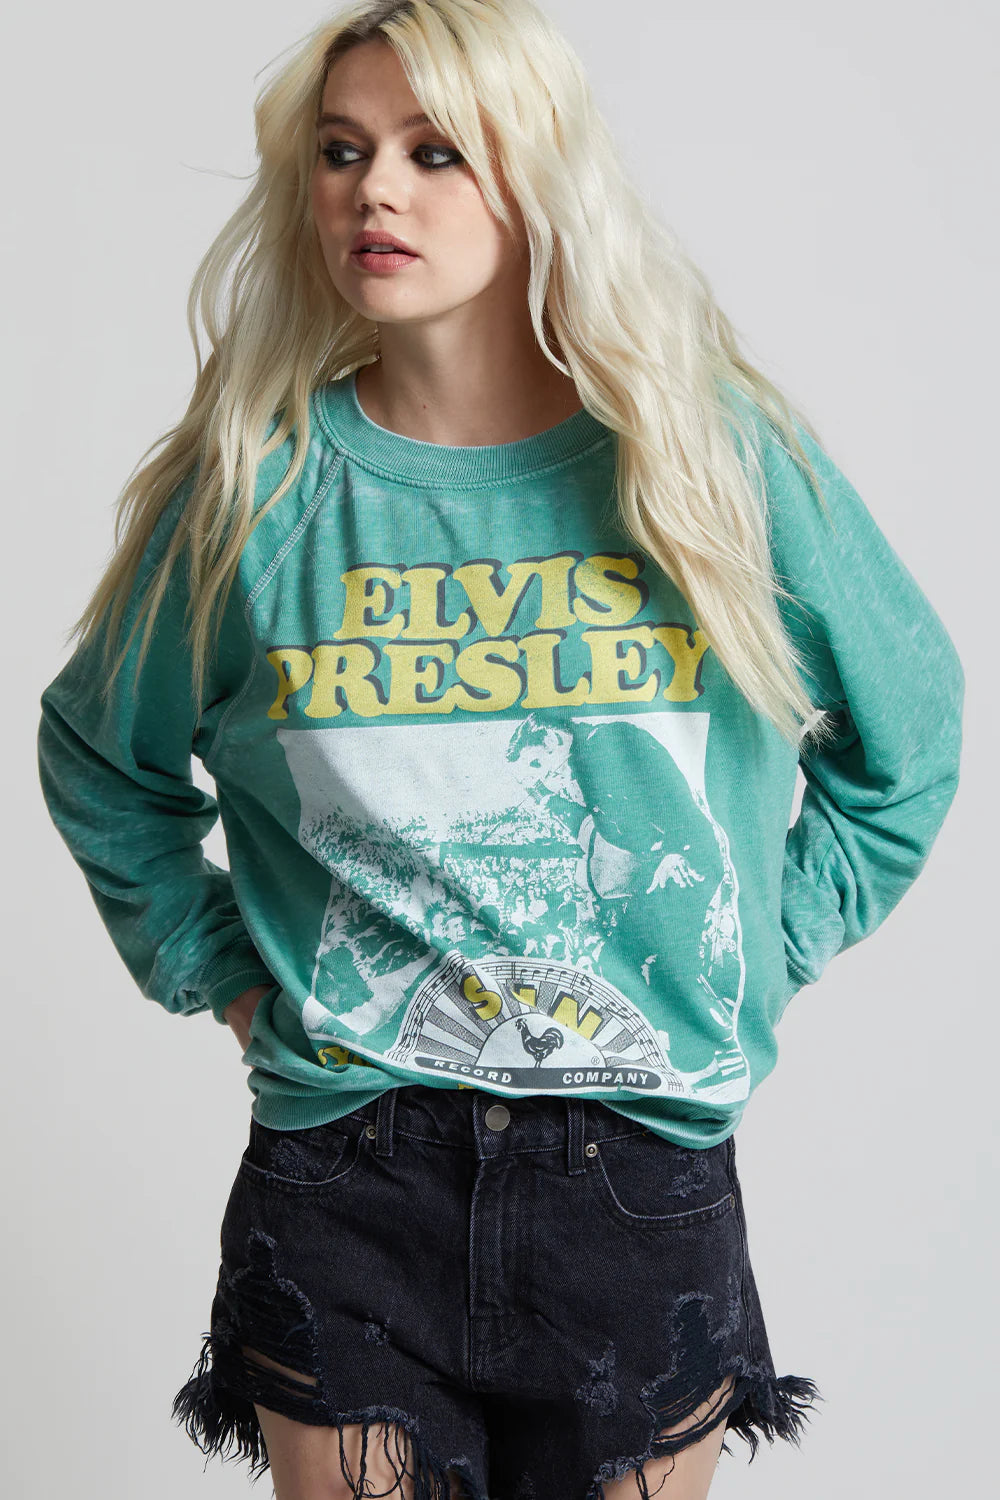 Sun Records x Elvis Presley Sweatshirt by Recycled Karma